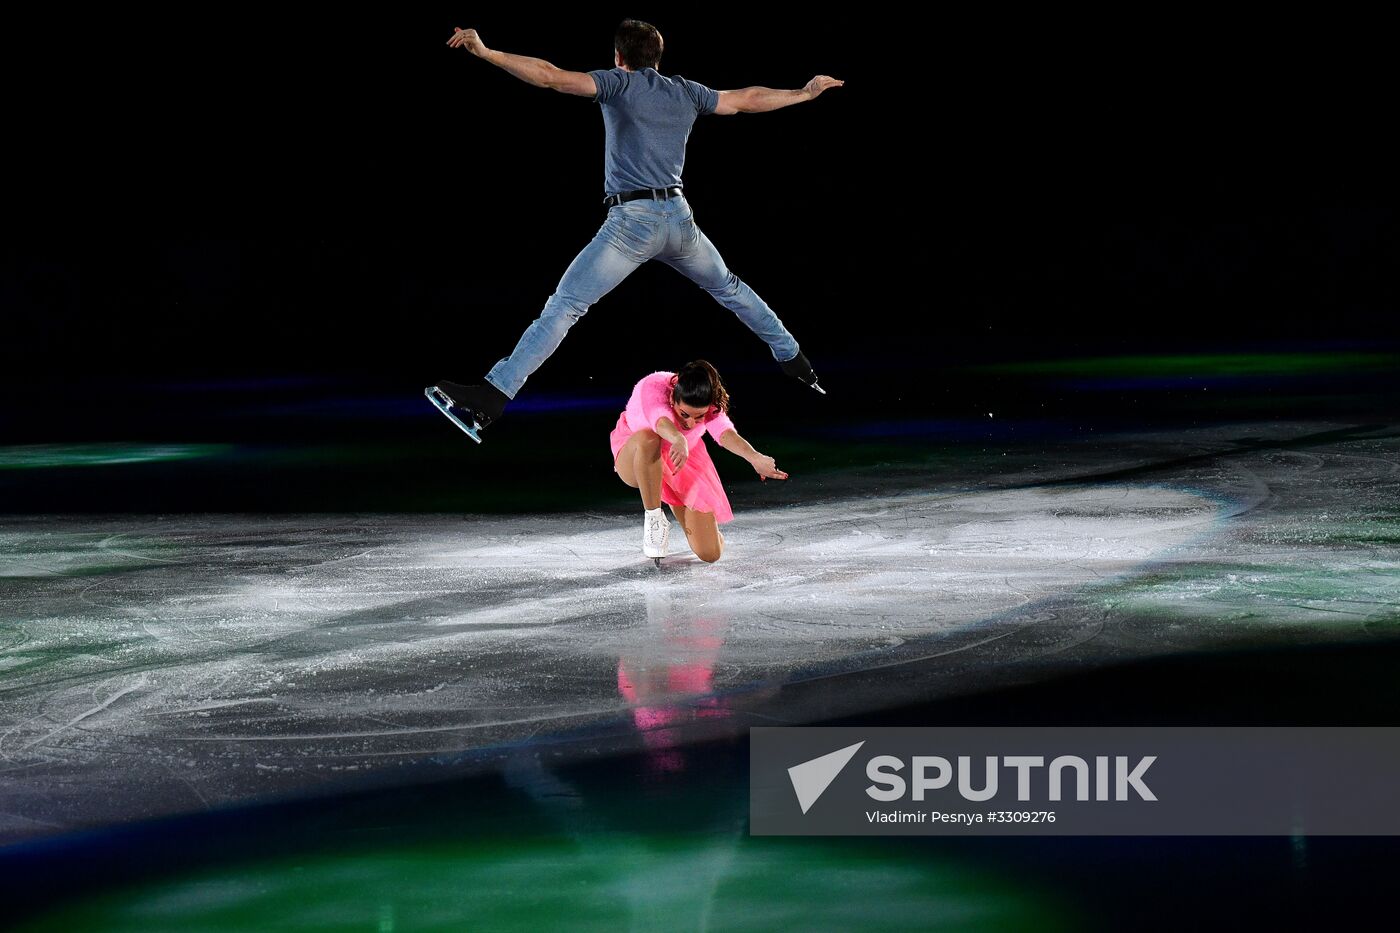 2018 Winter Olympics. Figure skating. Exhibition gala